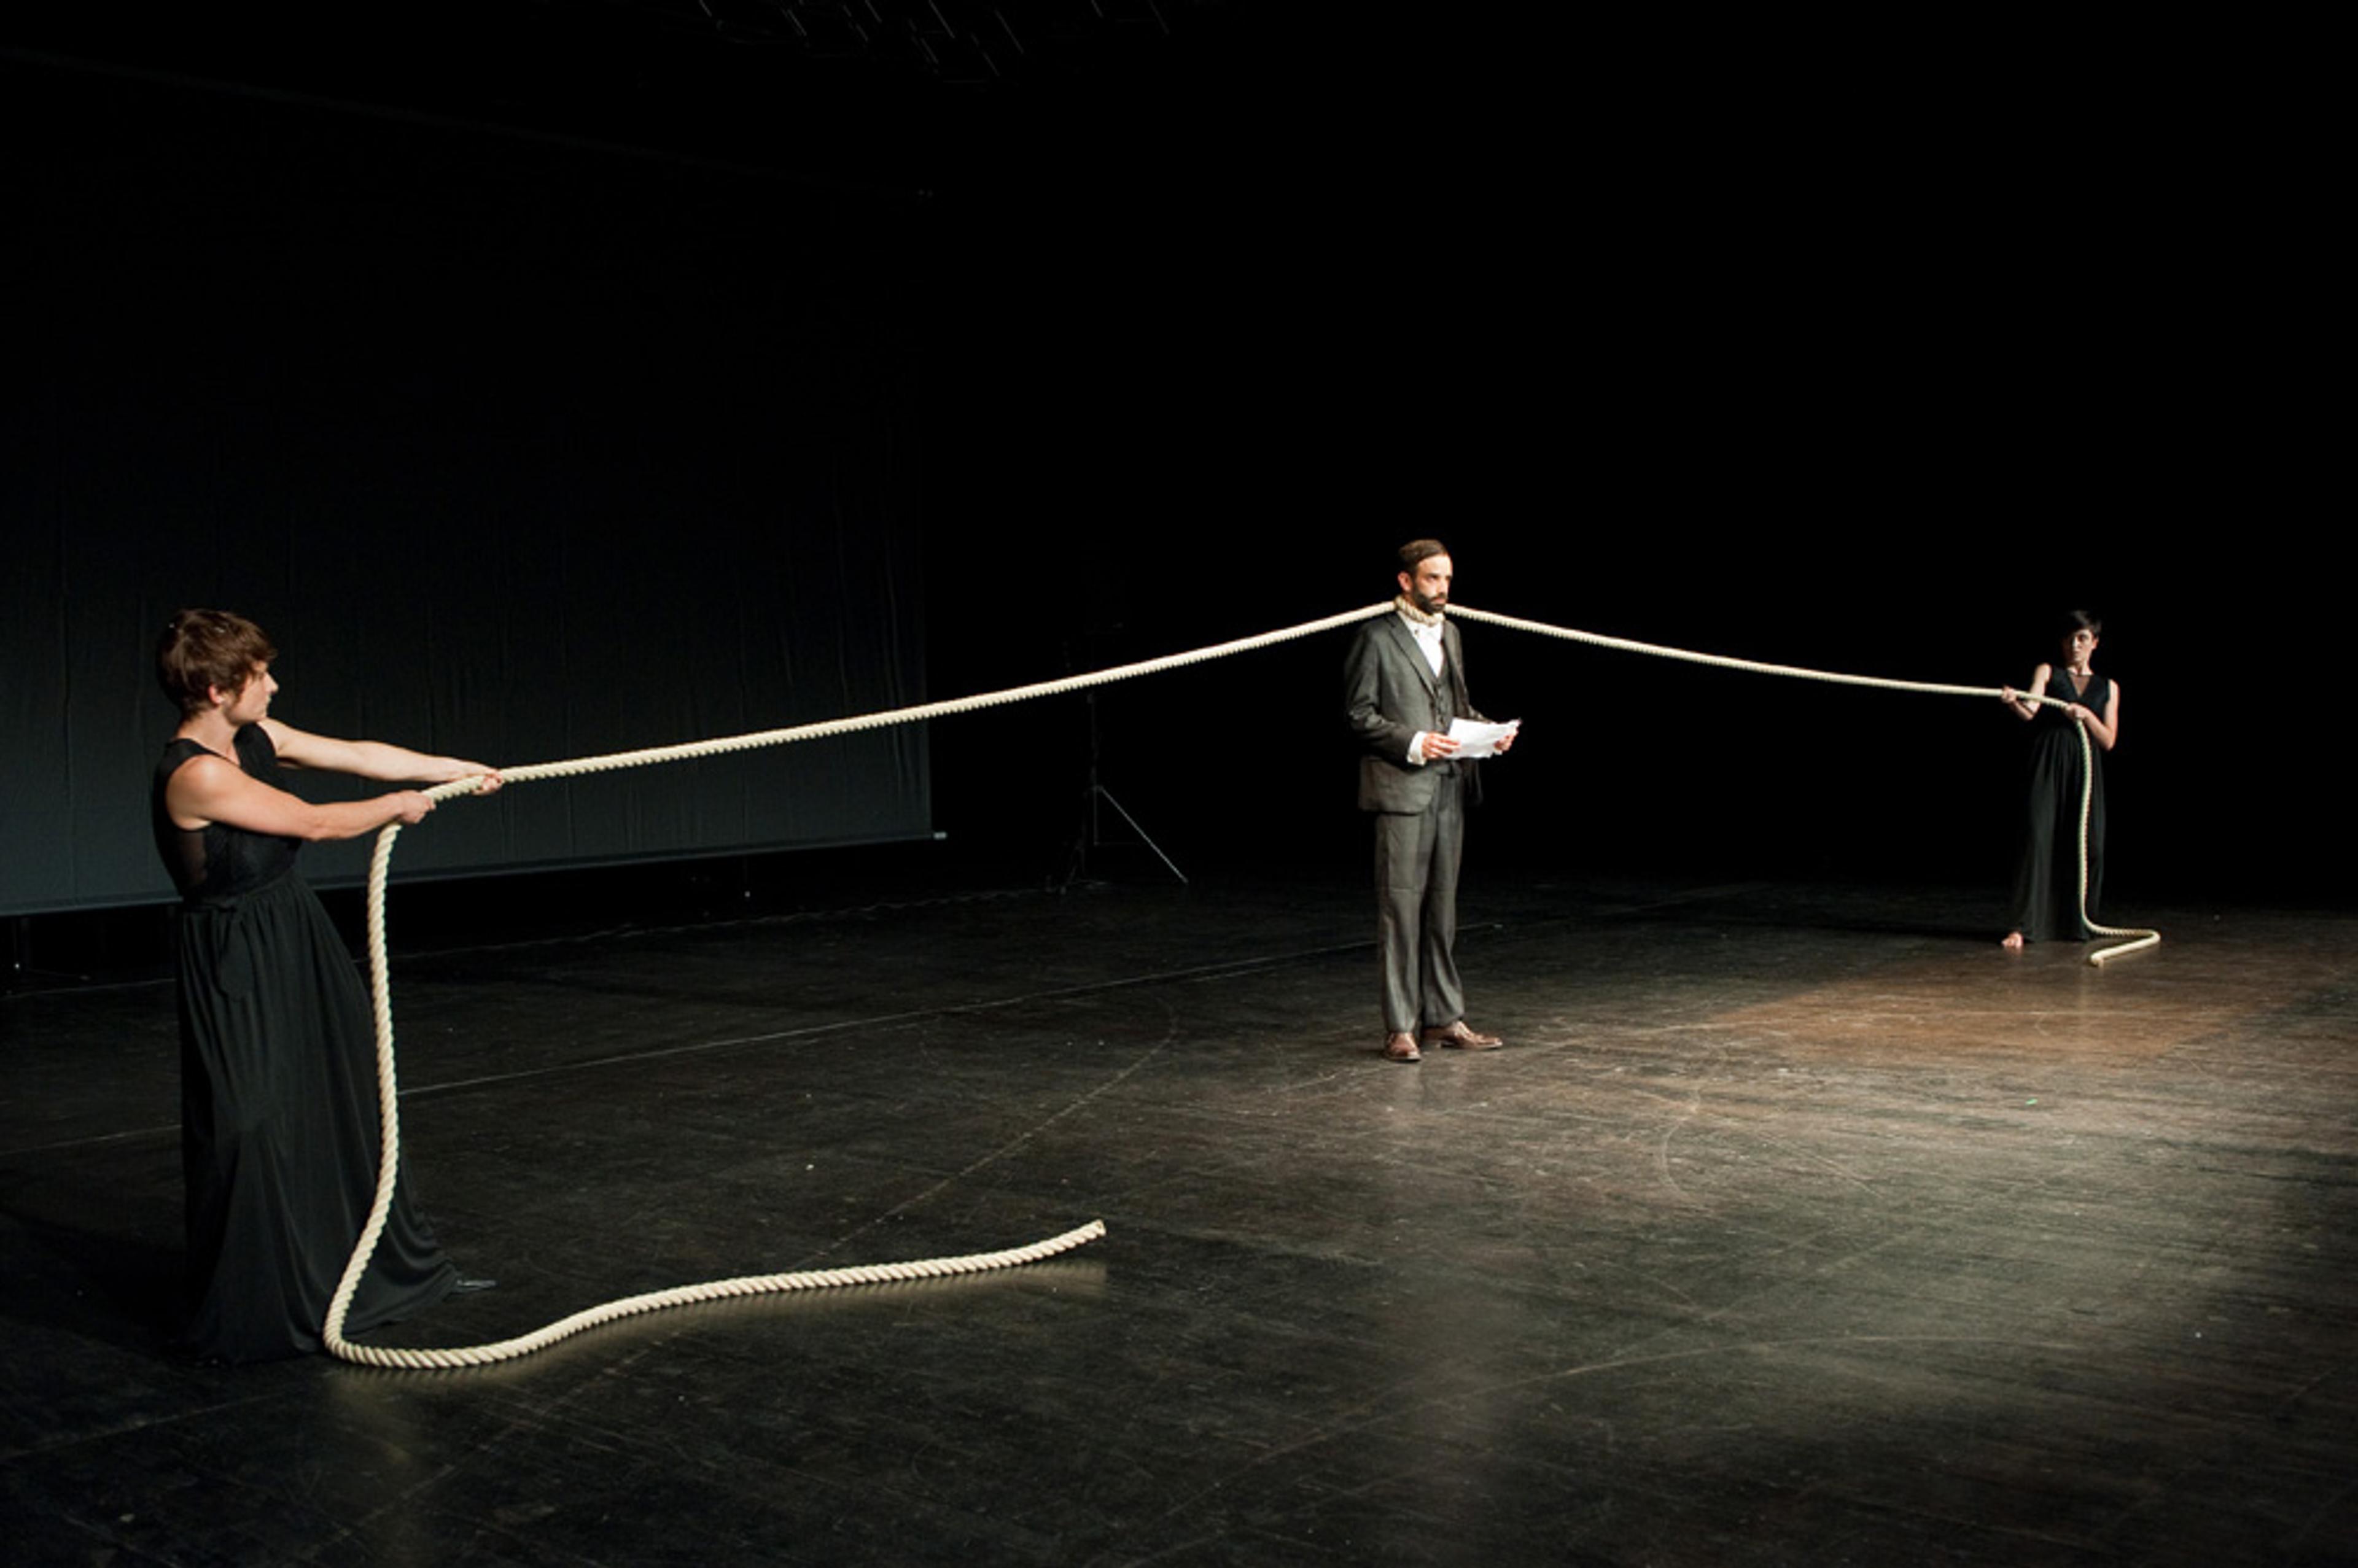 Anne Rochat & Gilles Furtwängler & Sarah Anthony, «Say Yes or Die», 2013 / Photo credit: Swiss Performance Art Award 2013